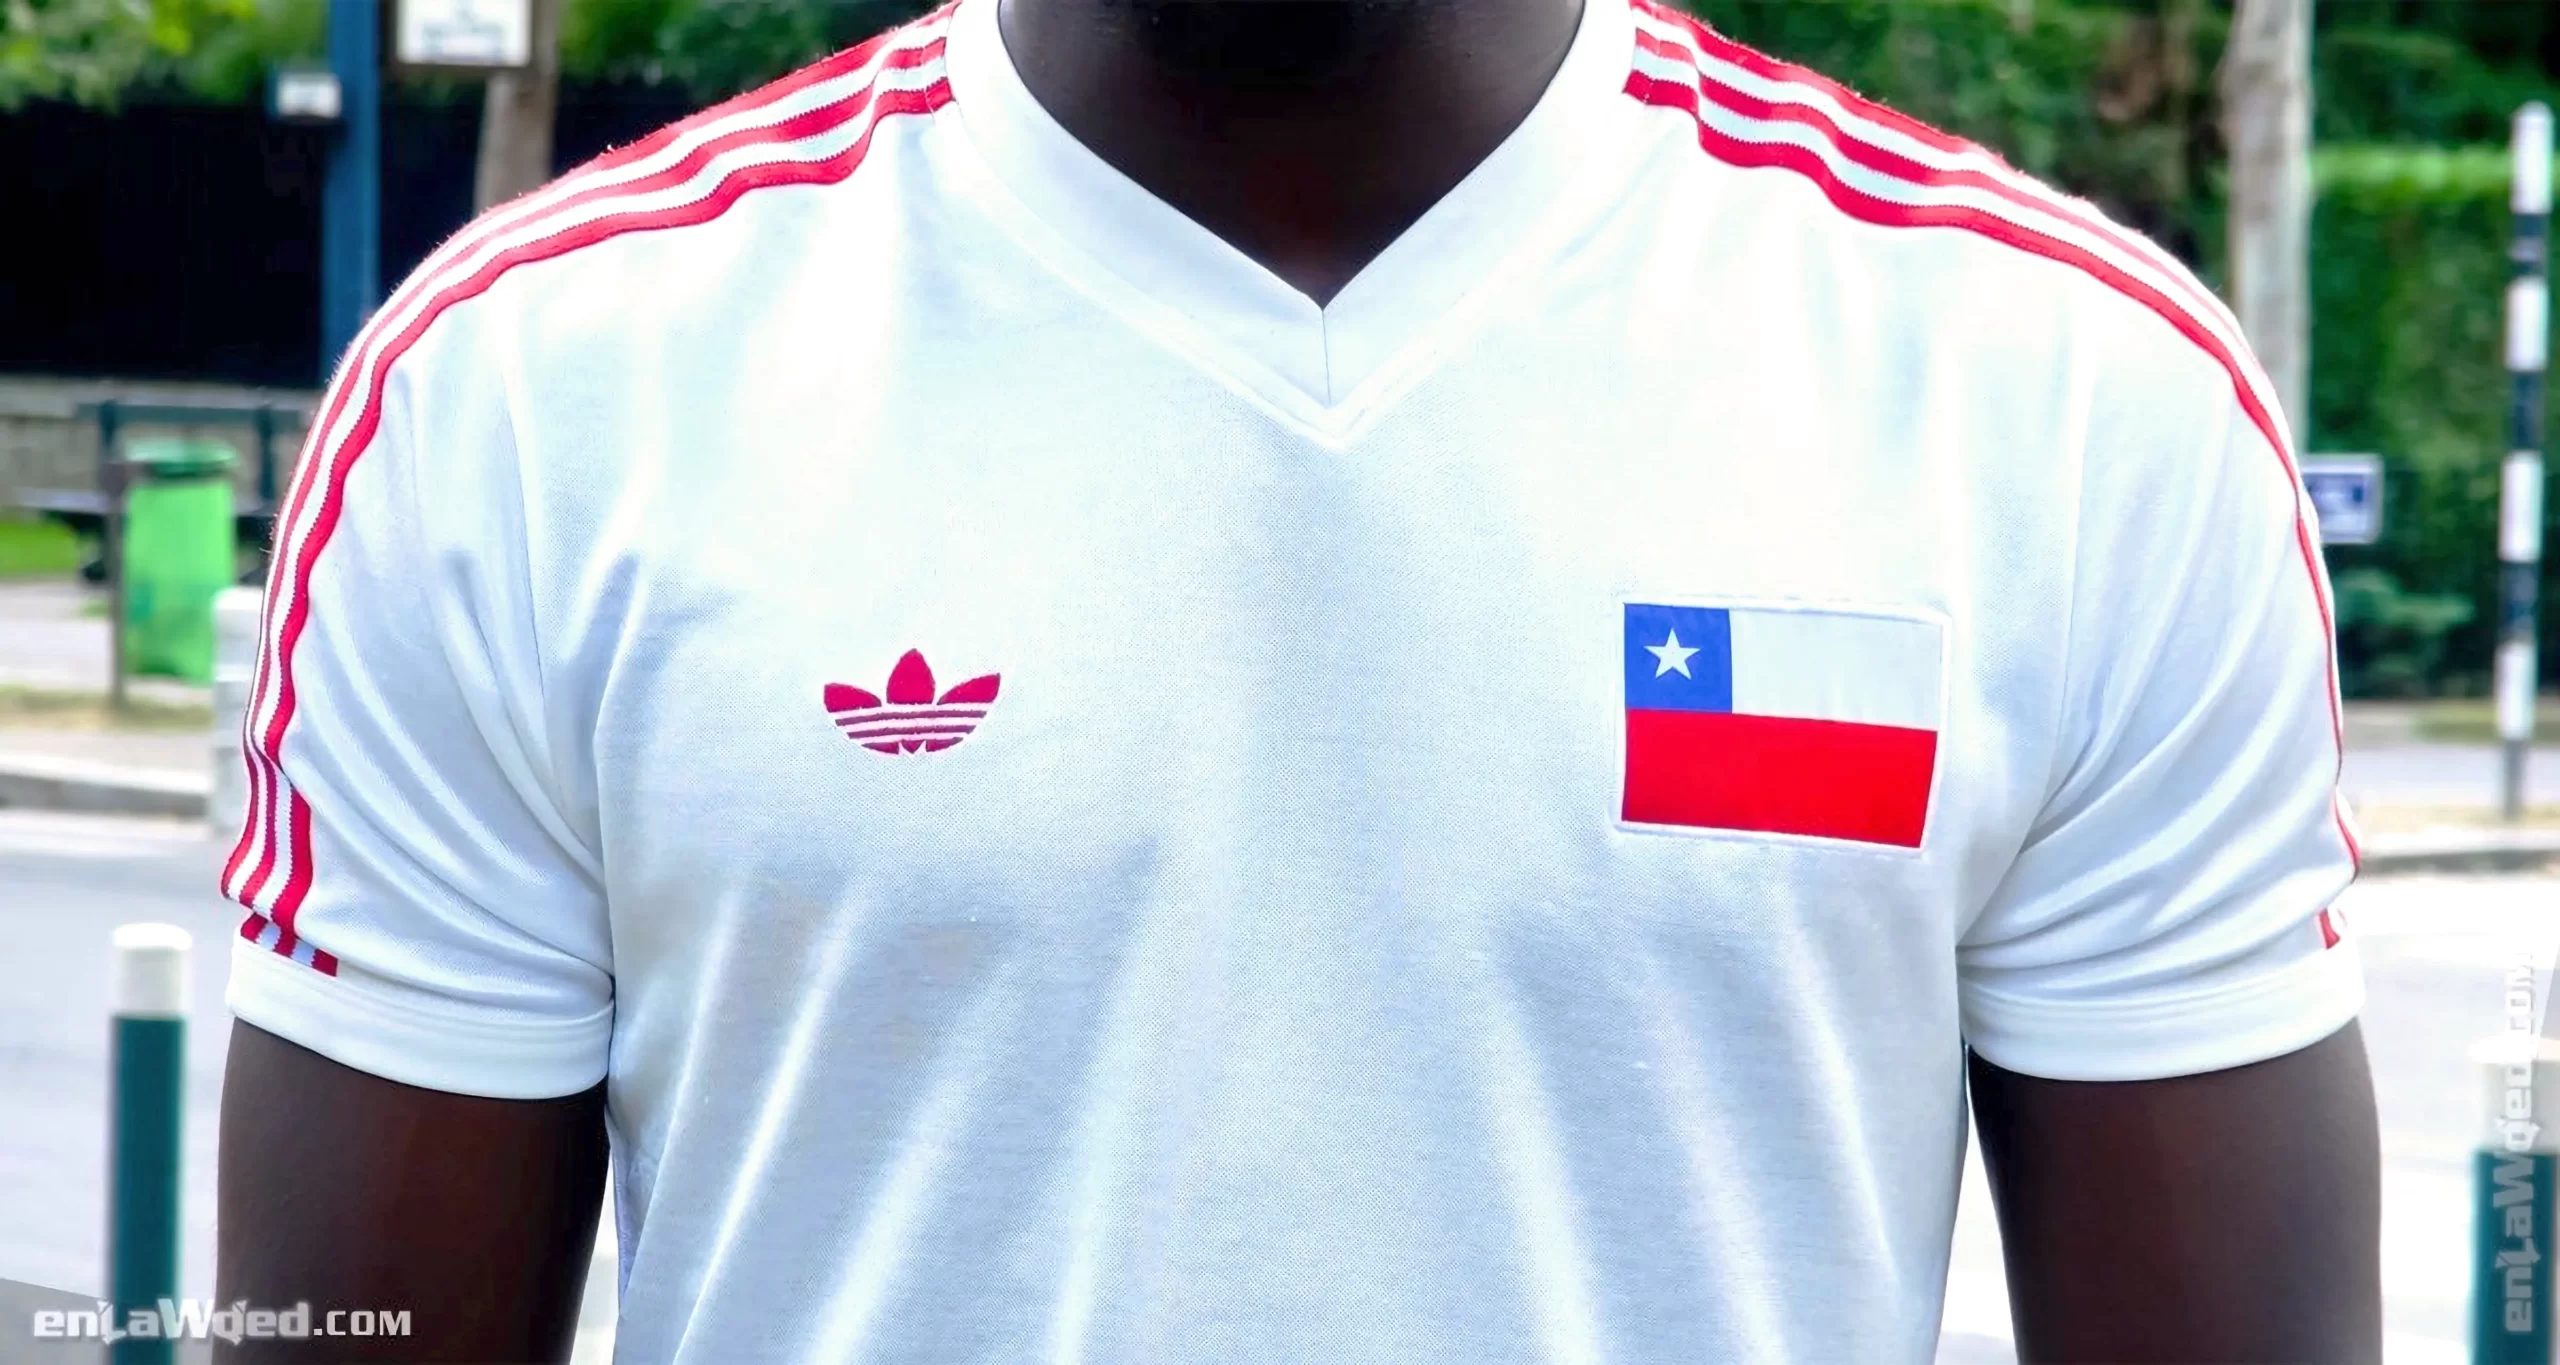 Men’s 2003 Chile ’82 Soto Jersey by Adidas Originals: Audacity (EnLawded.com file #lmc4jbwocs4ffk4wmwa)